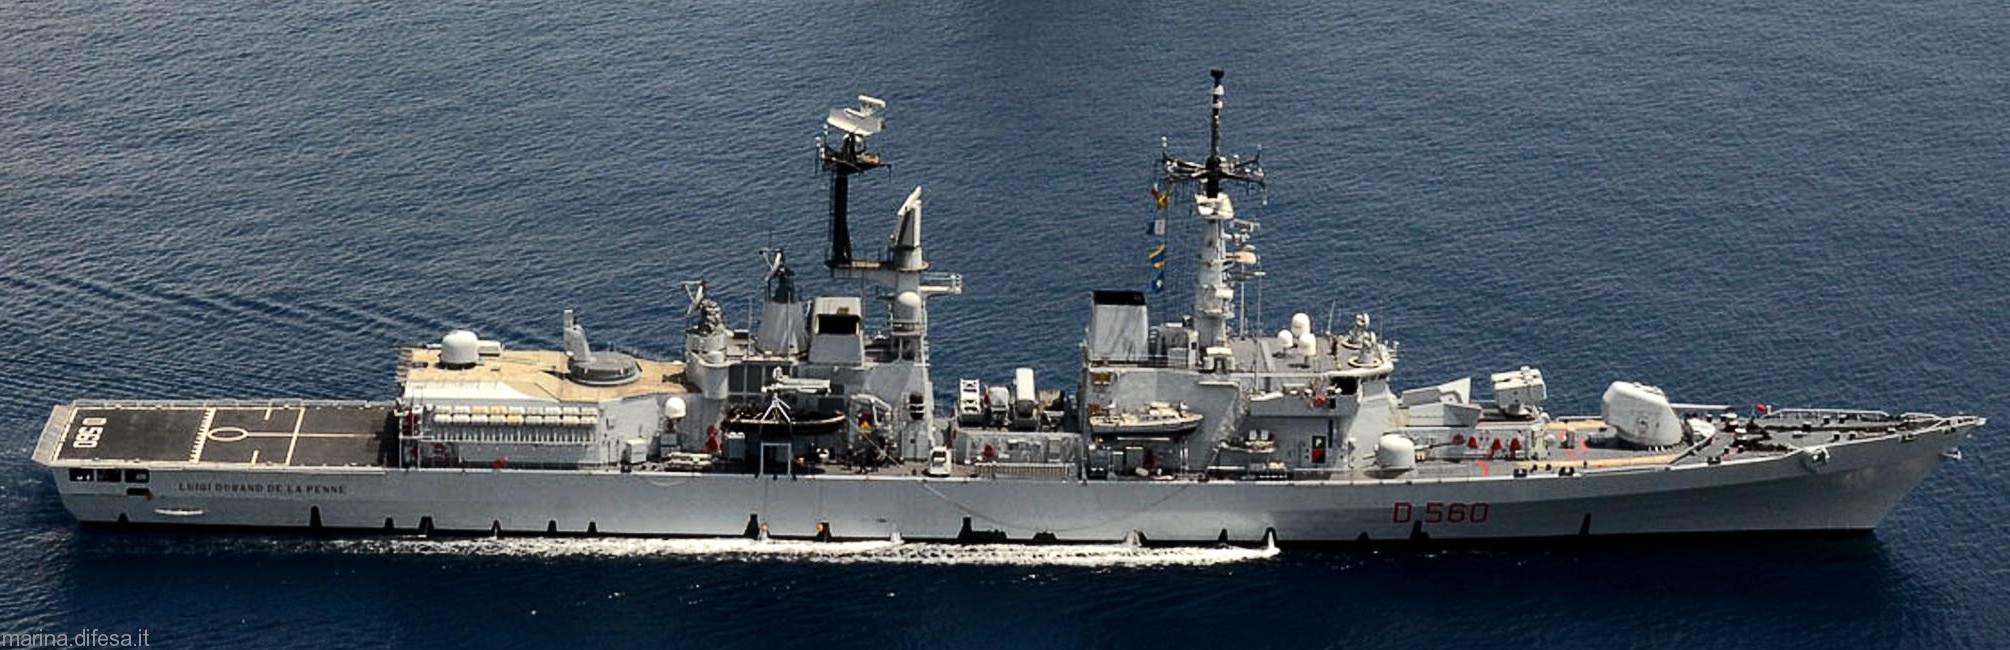 d-560 luigi durand de la penne its nave guided missile destroyer ddg italian navy marina militare 43